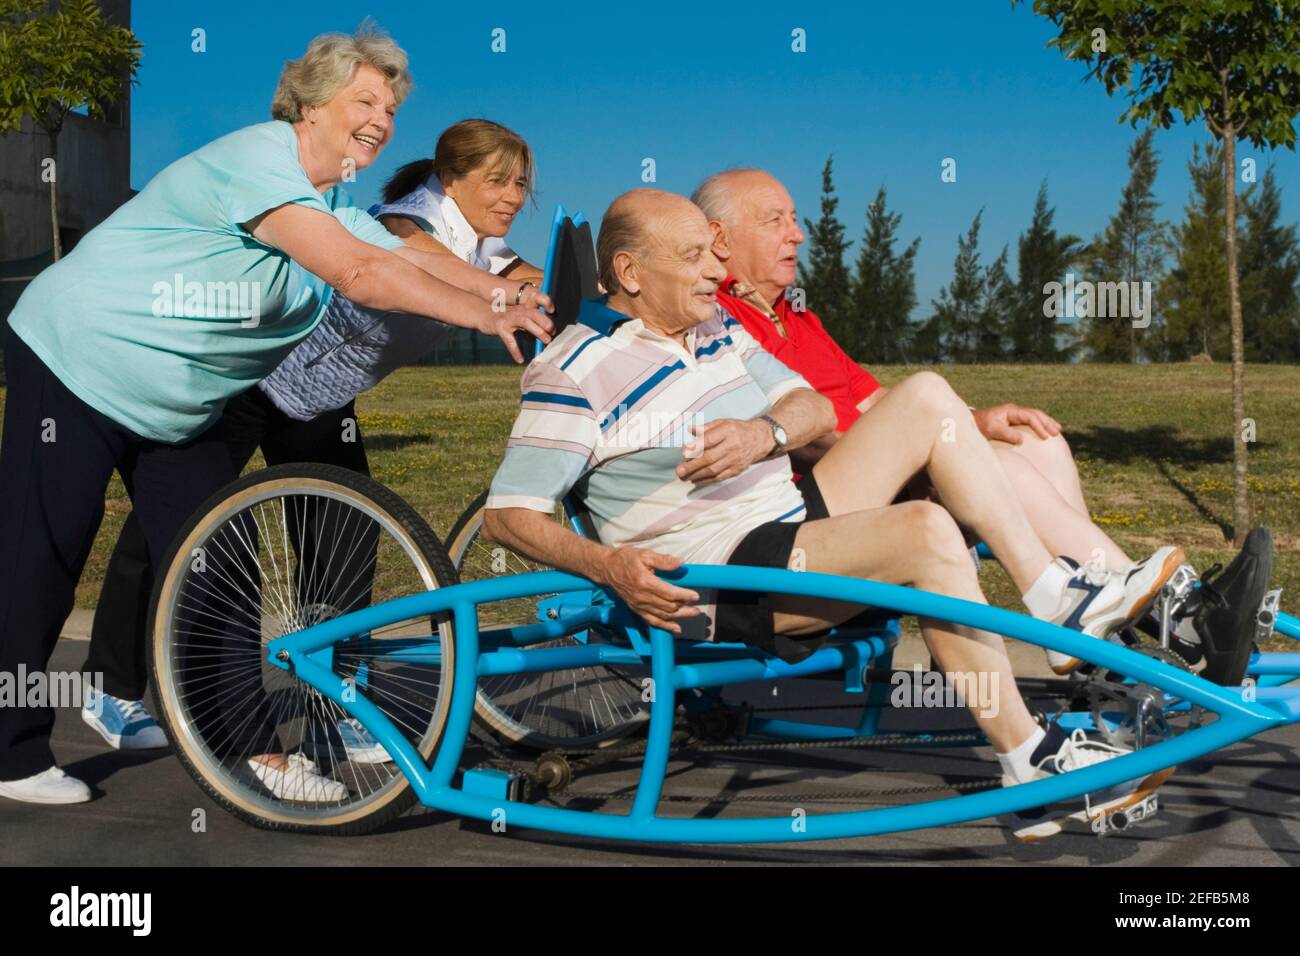 Two senior men sitting on a quadracycle and two senior women pushing it Stock Photo